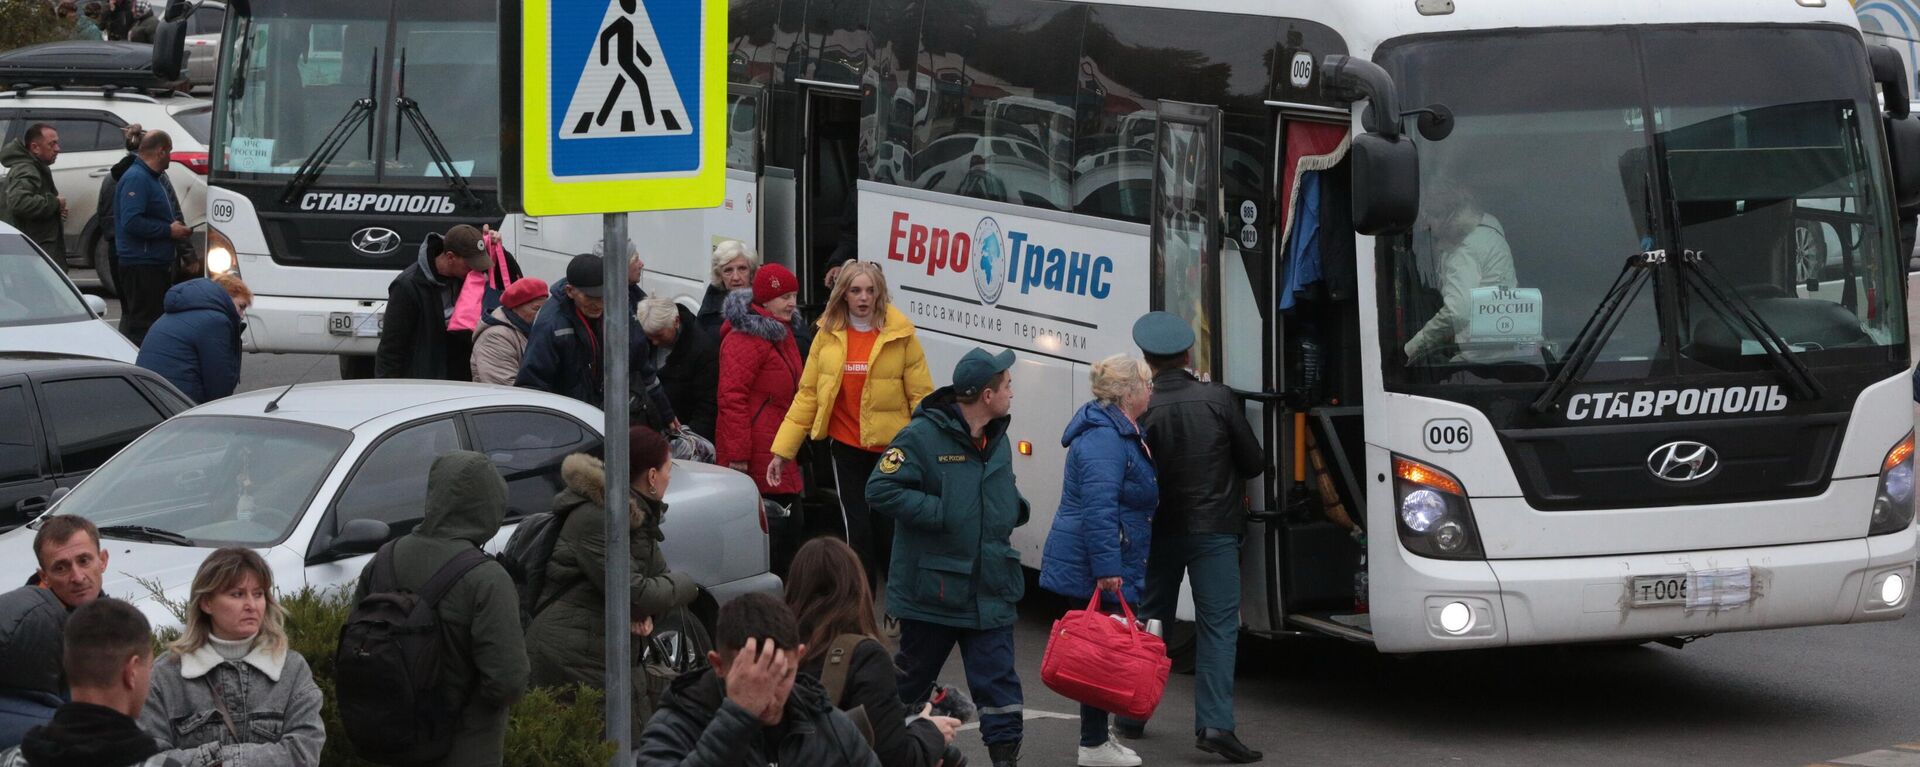 Evacuated residents of Kherson getting off a bus at Jankoi, Crimea, October 2022 - Sputnik International, 1920, 25.02.2023